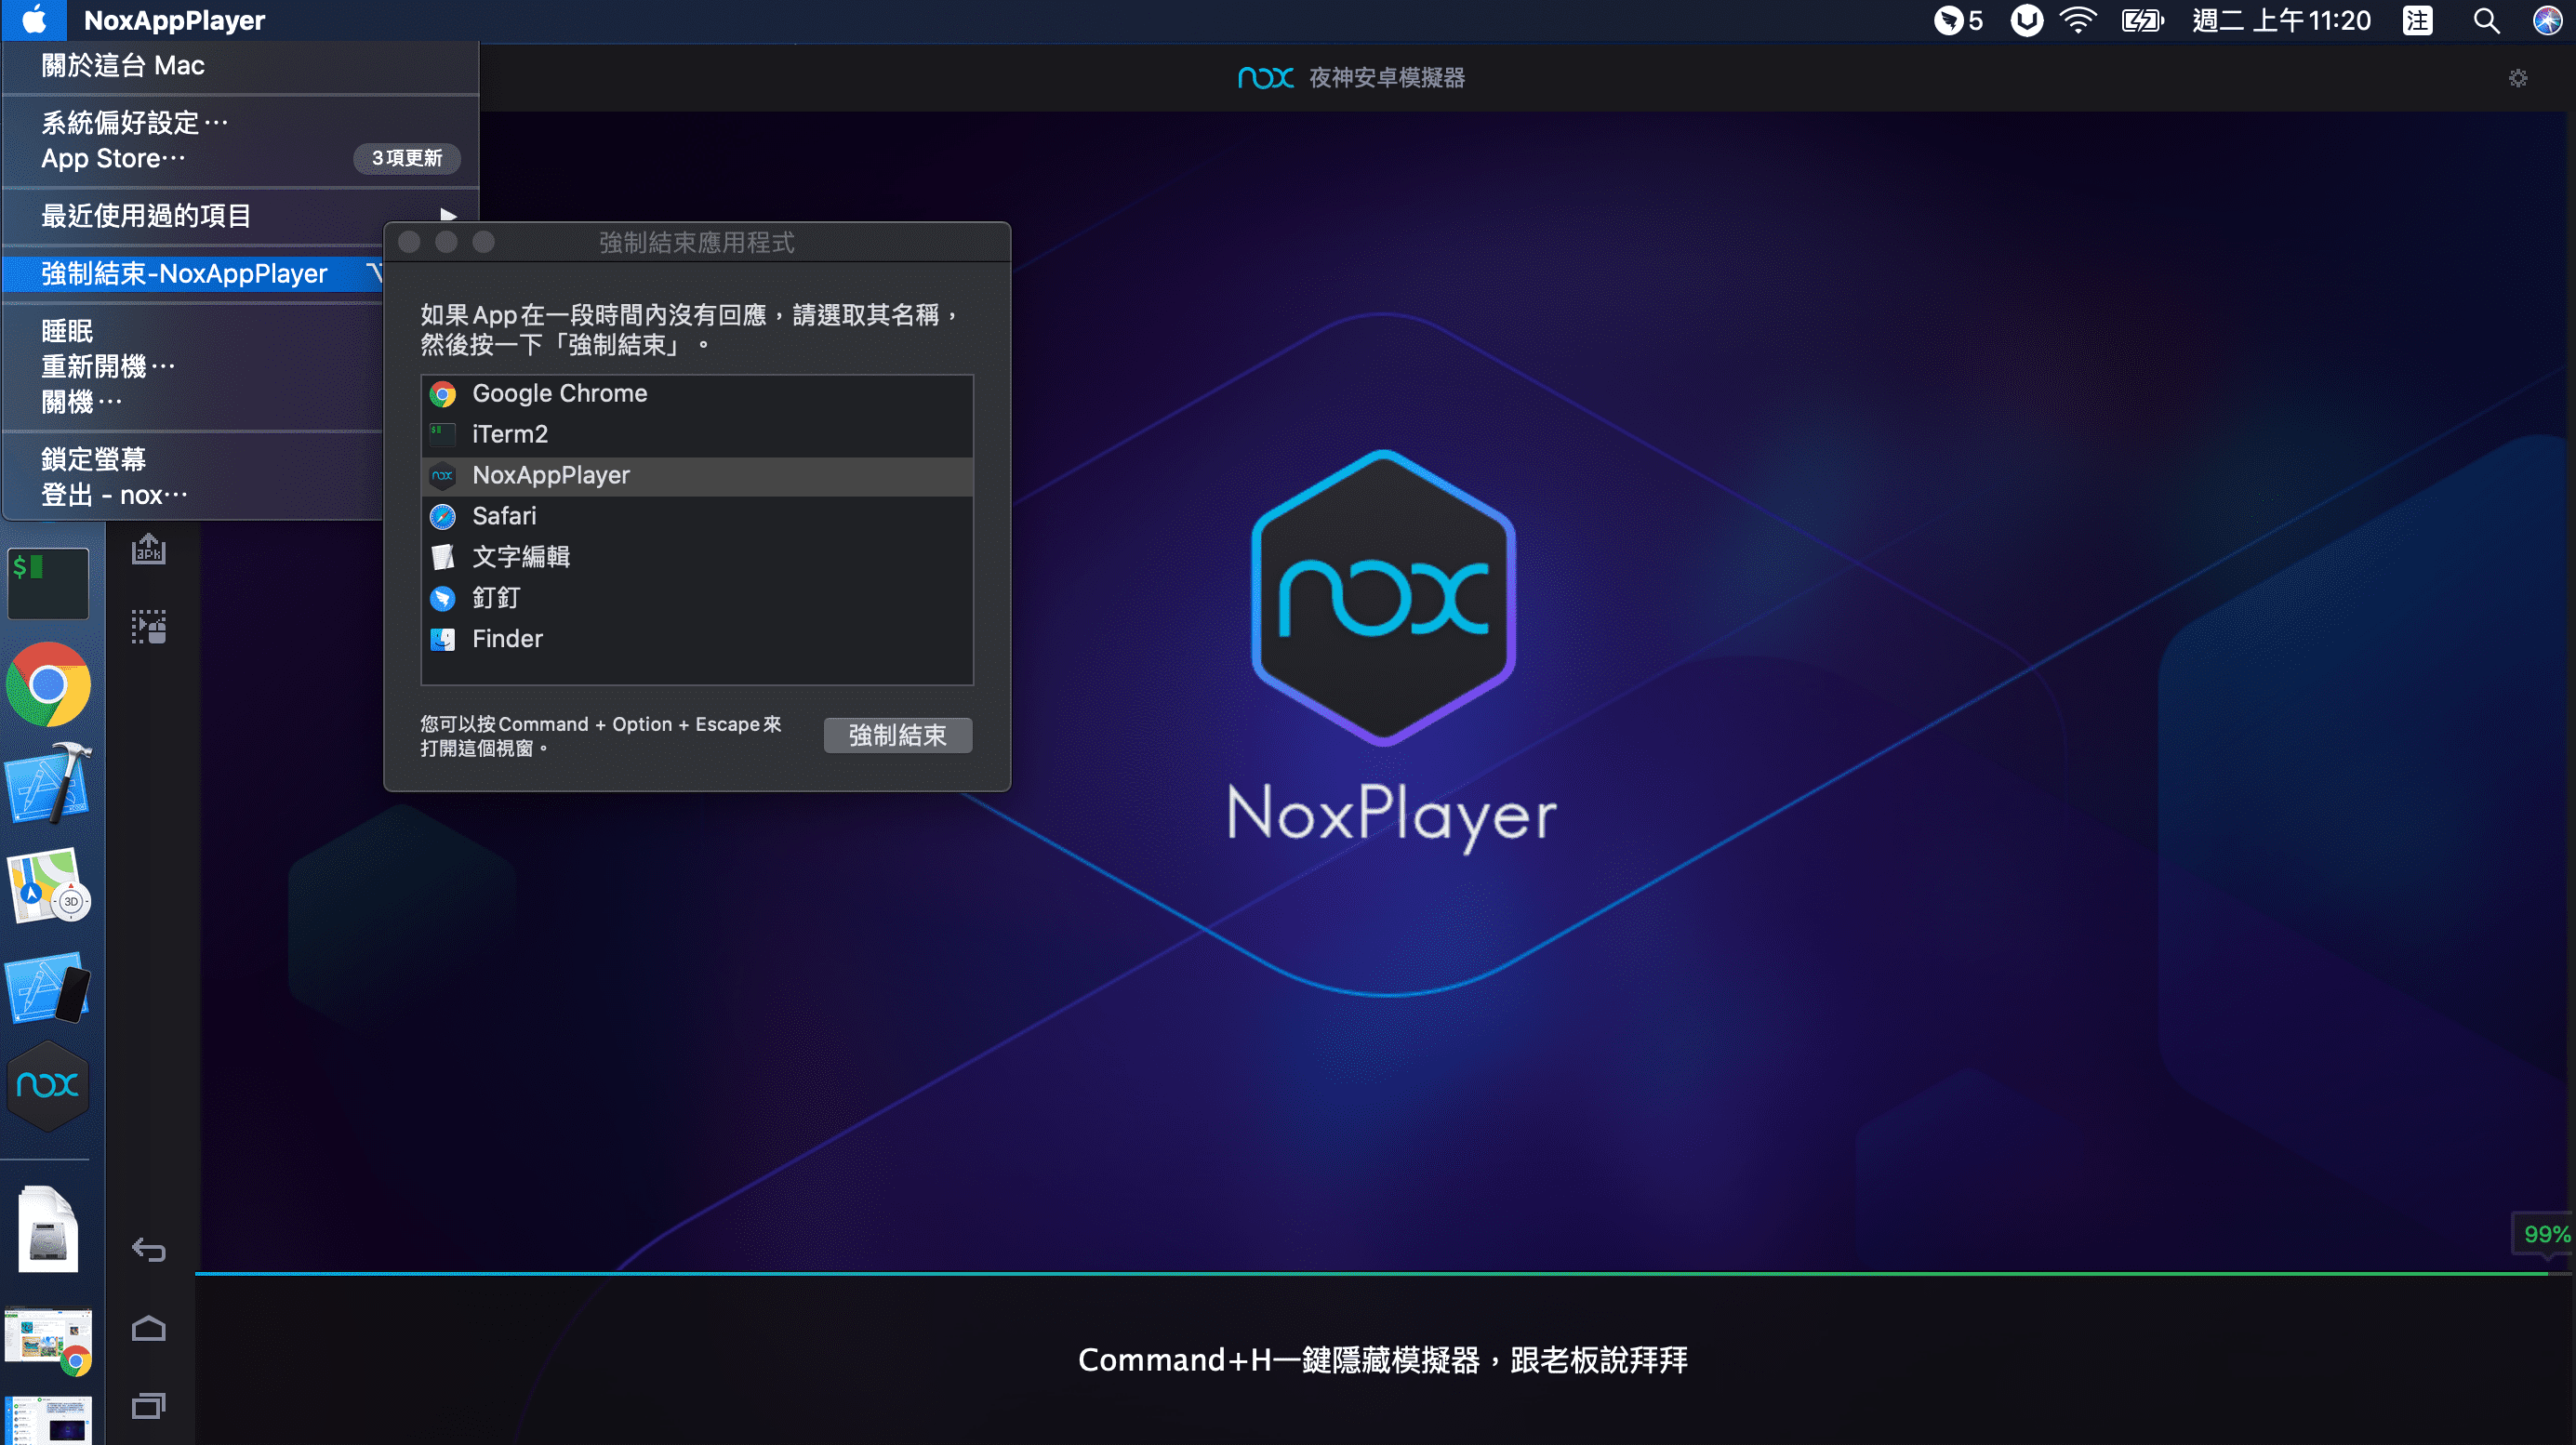 noxplayer random app installed itself